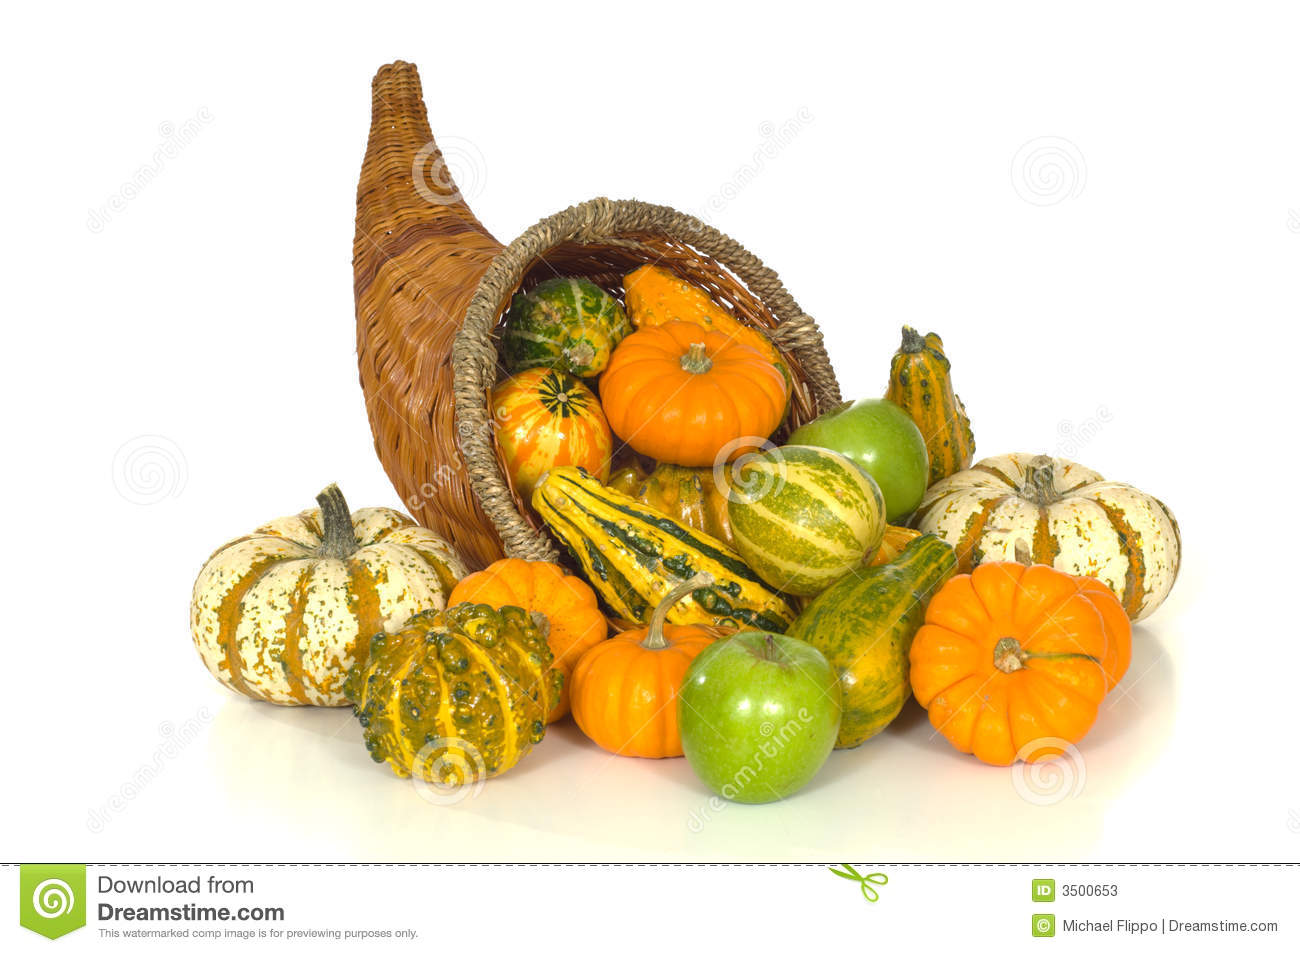 Cornucopia With Fall Harvest Items Including Pumpkins Gords Apples